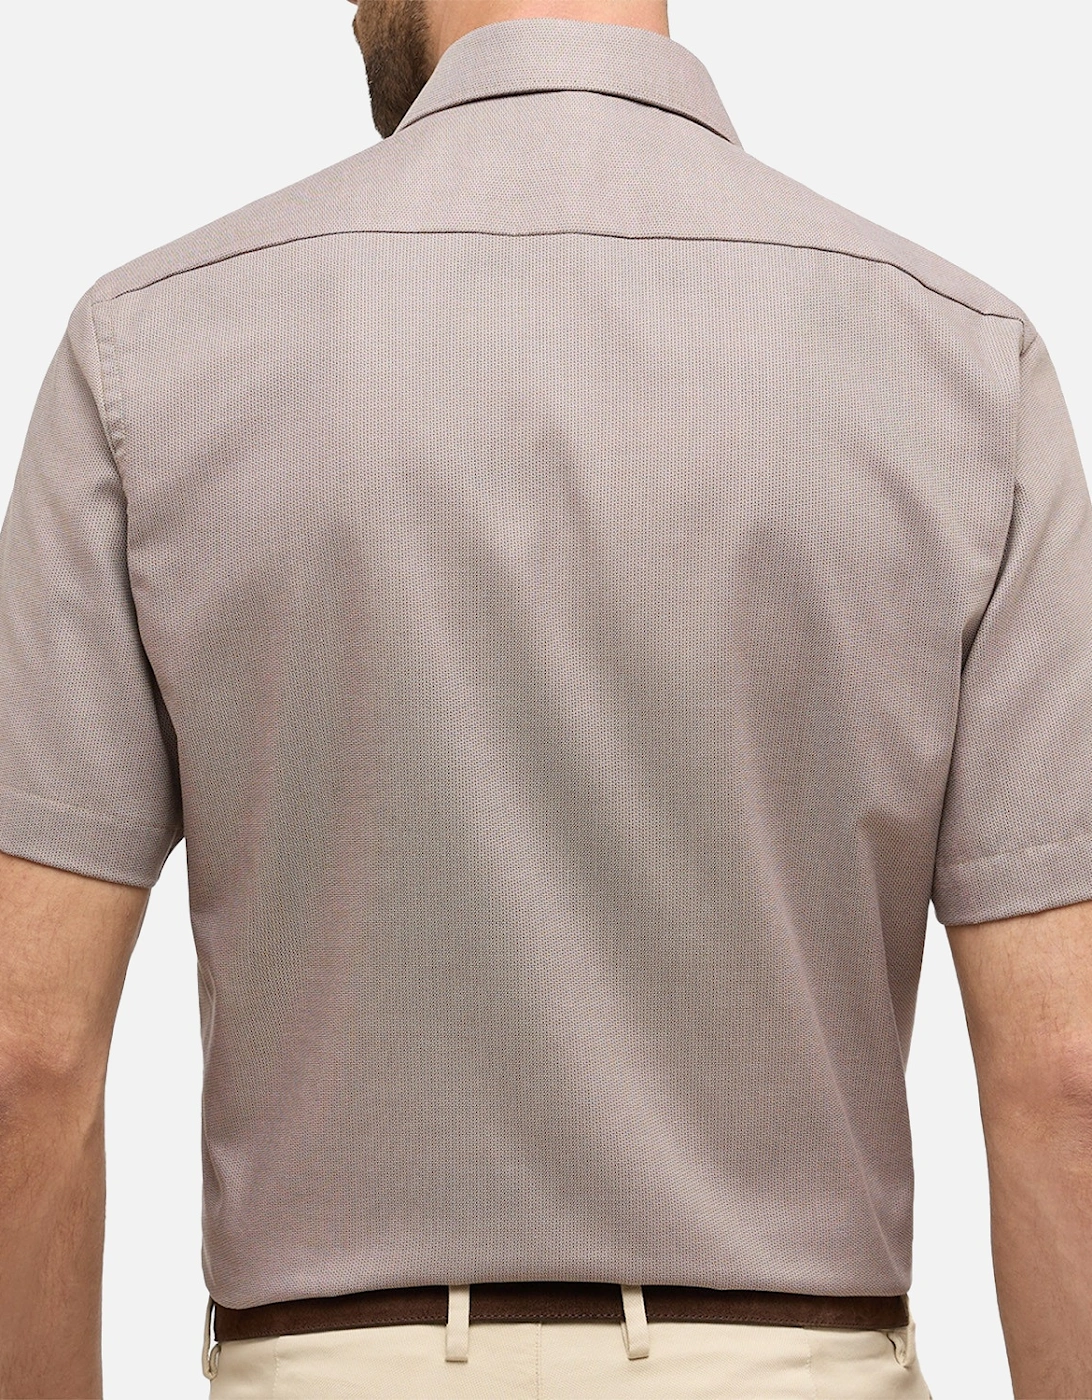 Mens 8204 Short Sleeve Shirt (Tan)